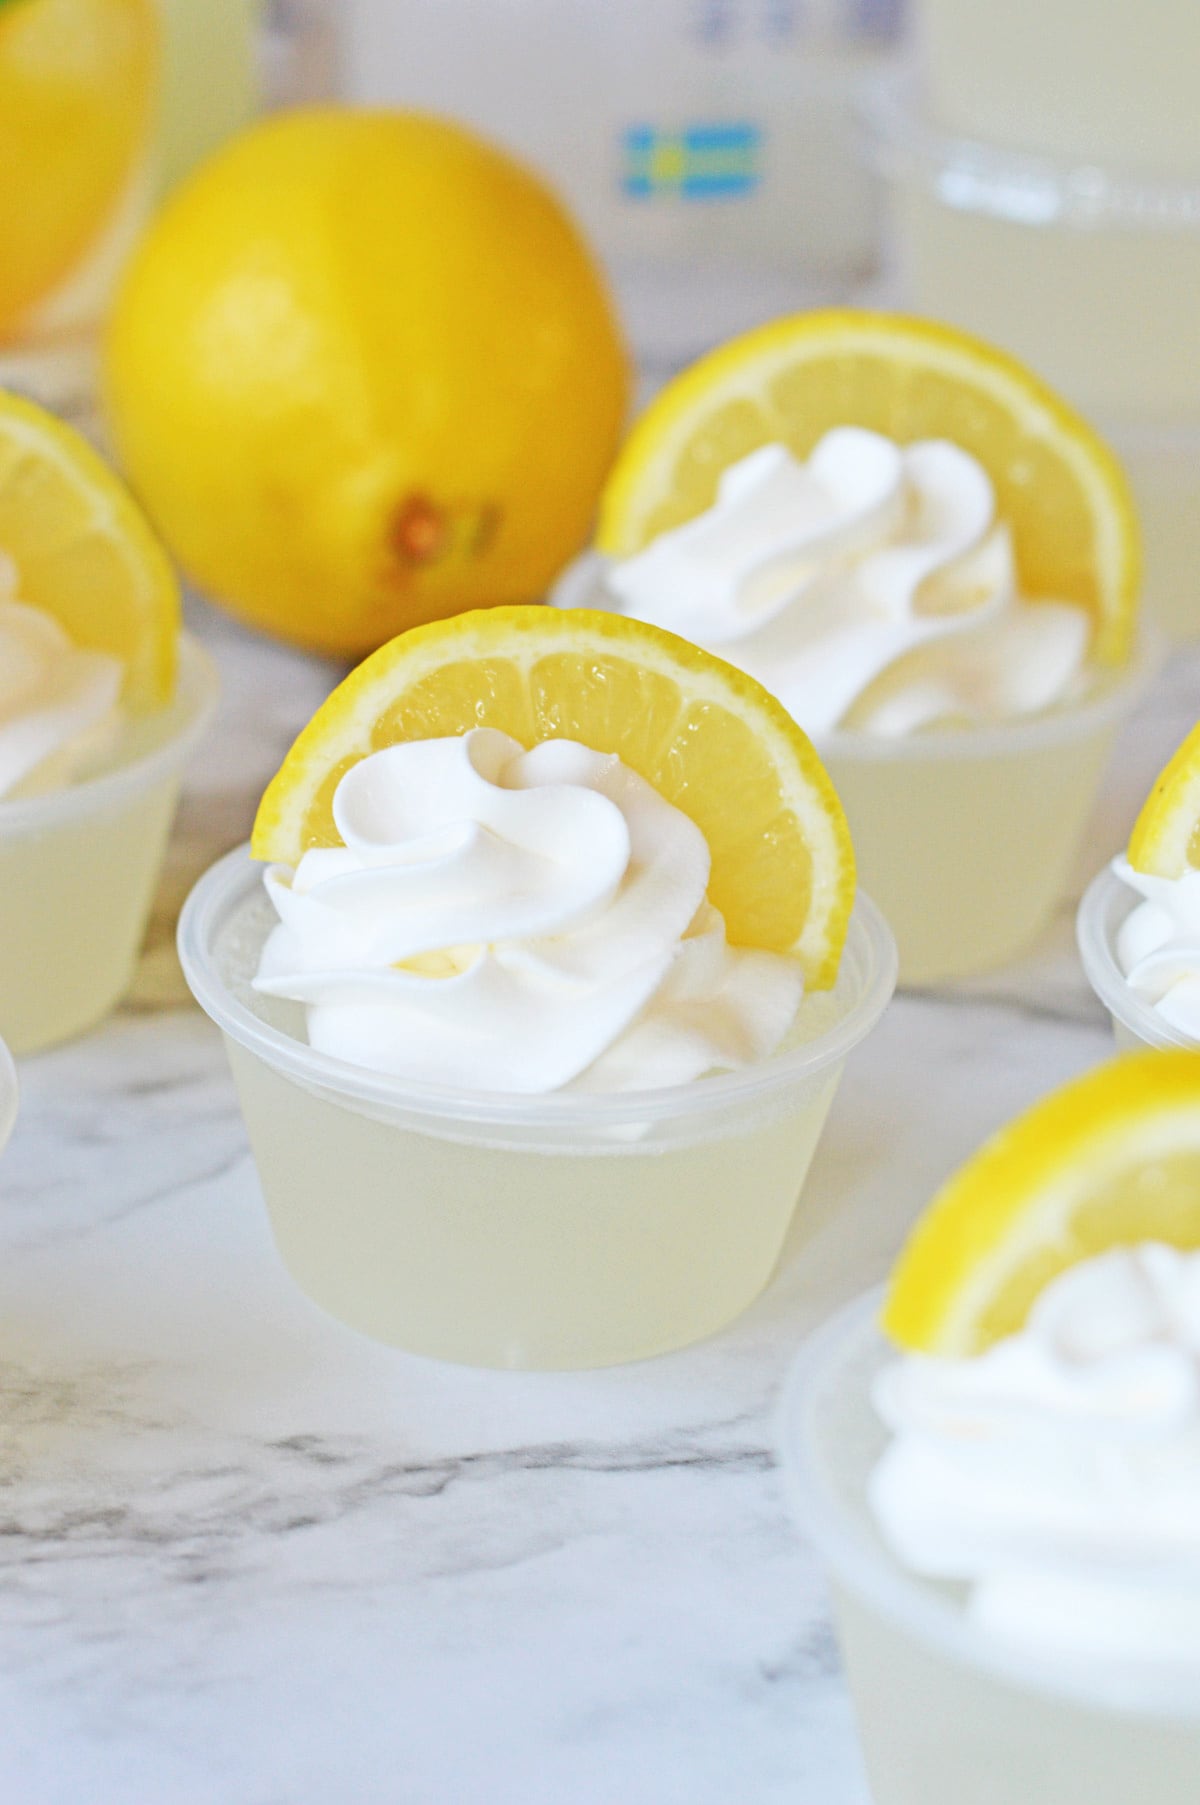 Lemonade jello shots up close